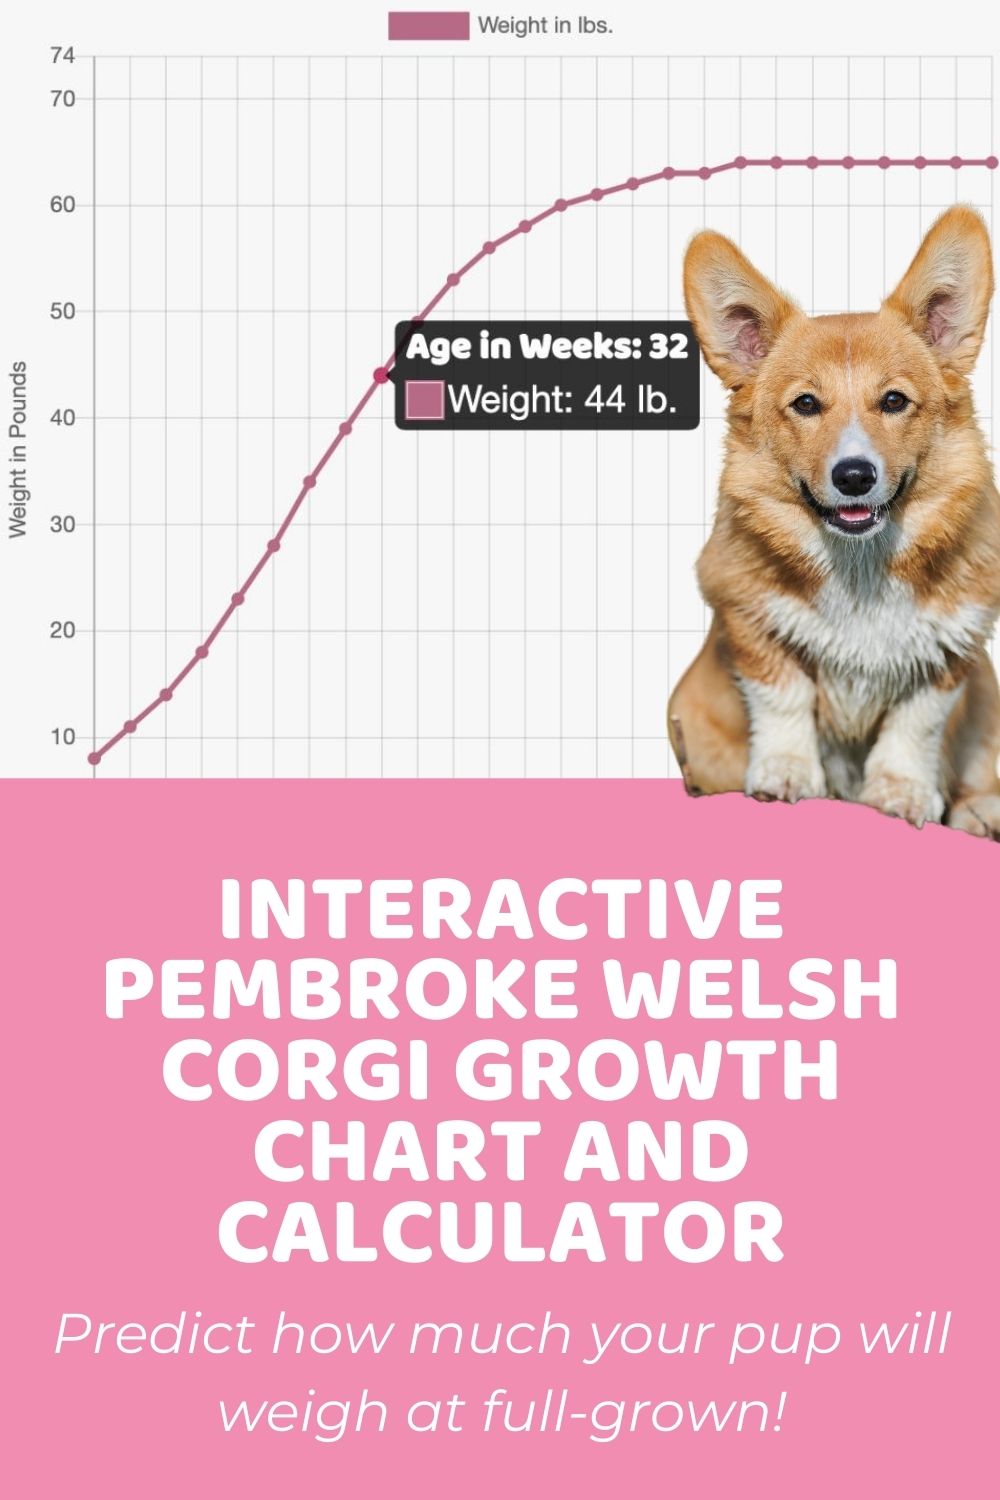 Interactive Pembroke Welsh Corgi Growth Chart and Calculator